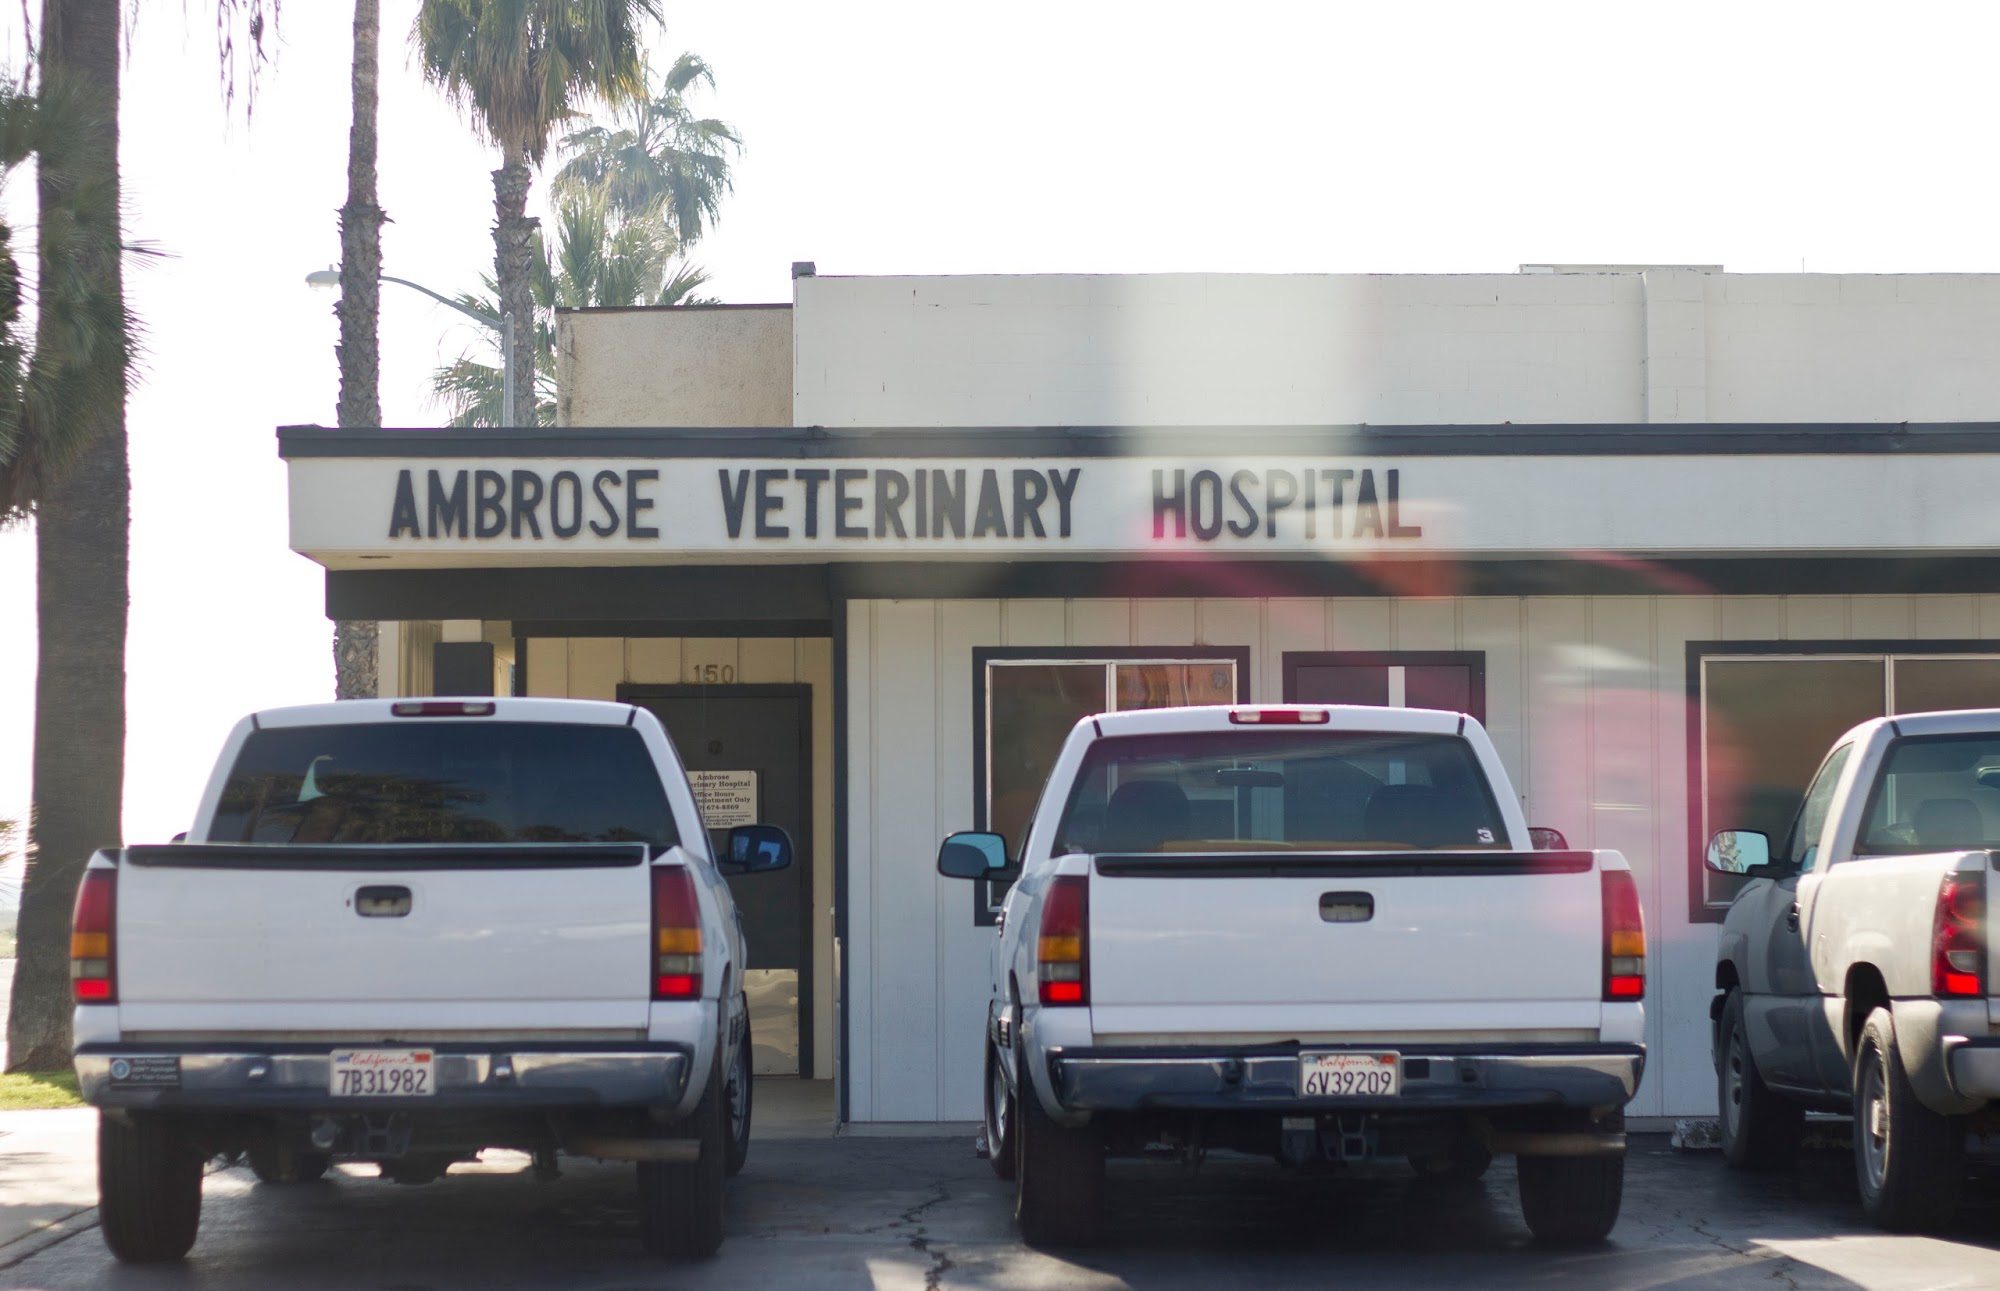 Ambrose Veterinary Hospital